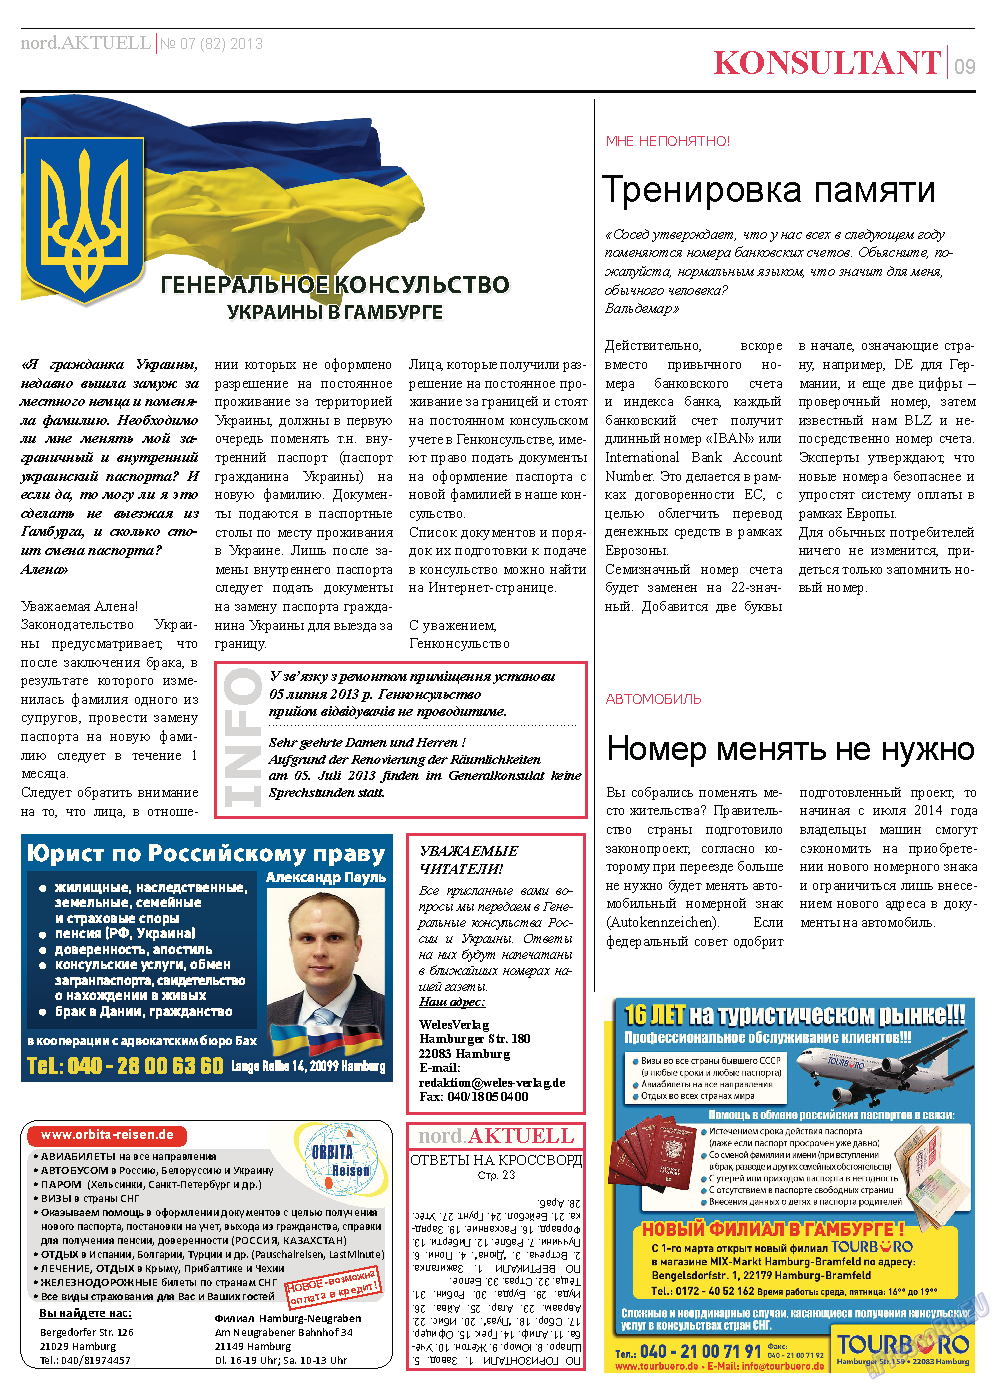 nord.Aktuell, газета. 2013 №7 стр.9